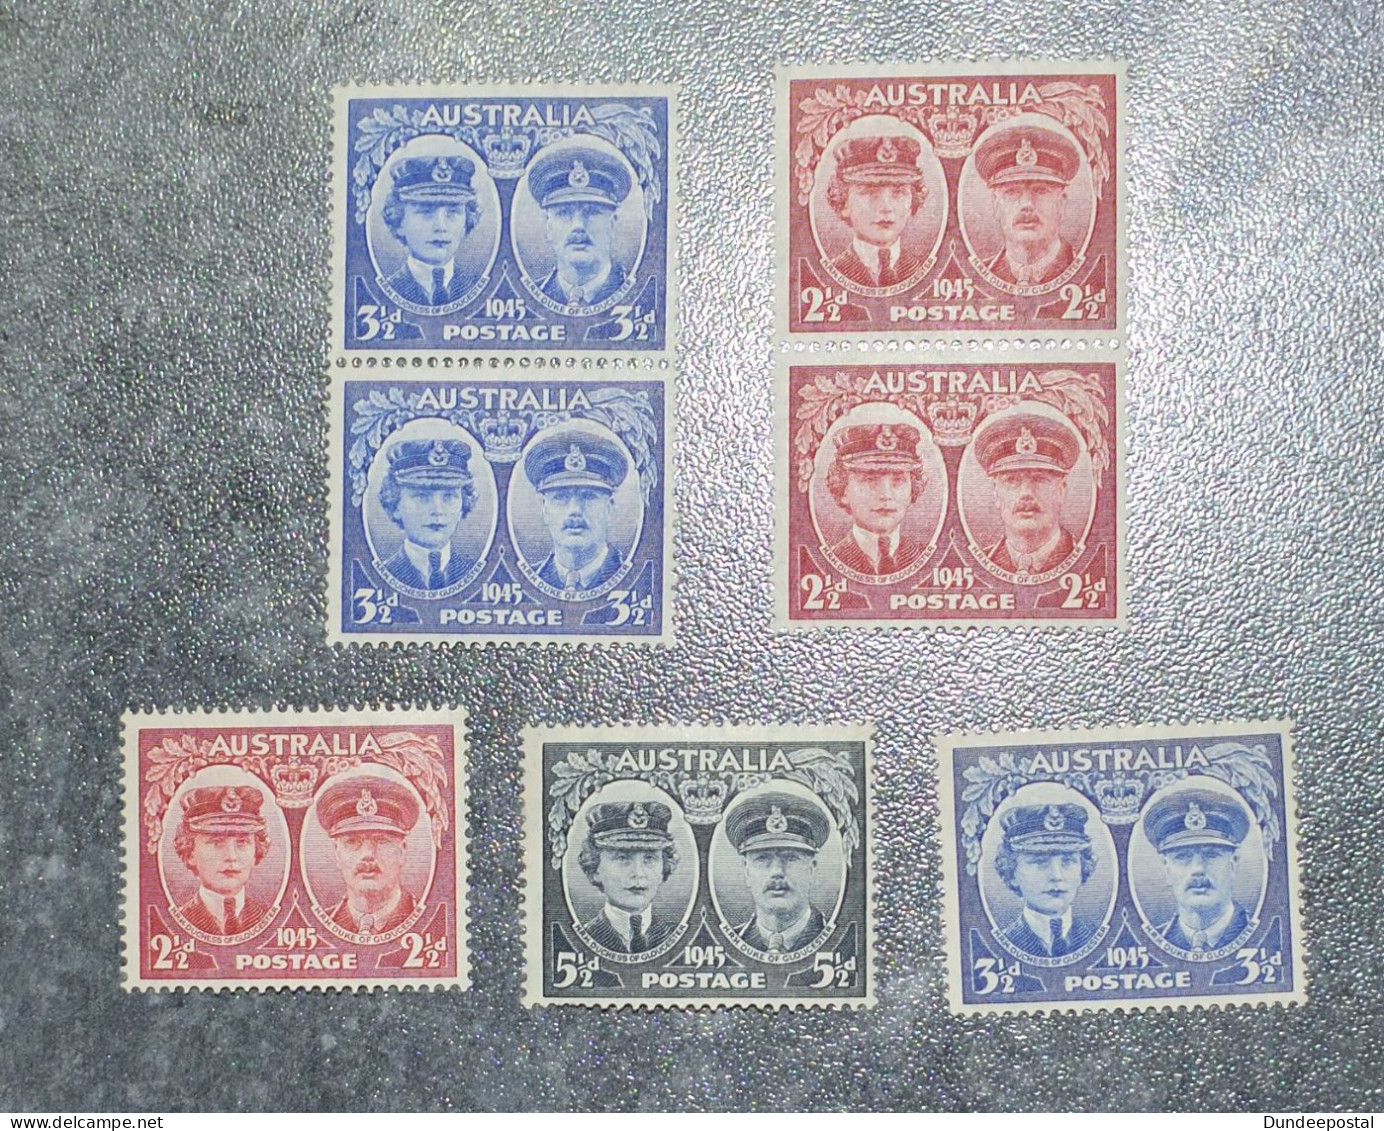 AUSTRALIA  Stamps Comms. MNH + Small Mount  SG209 210 211 1945   (R3) ~~L@@K~~ - Neufs